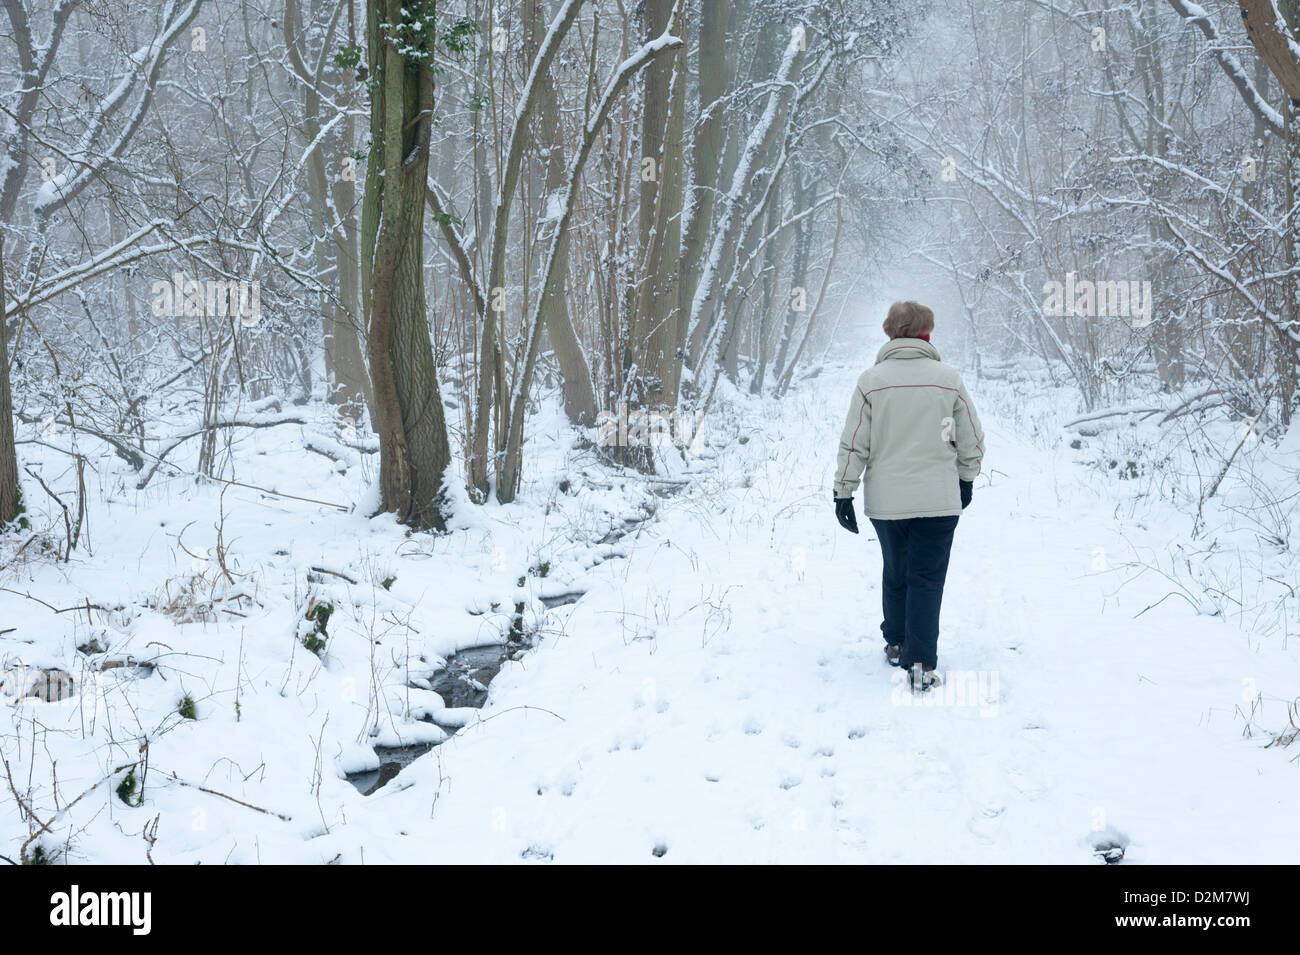 A woman walking along a path between trees in misty snowy woods in winter Stock Photo